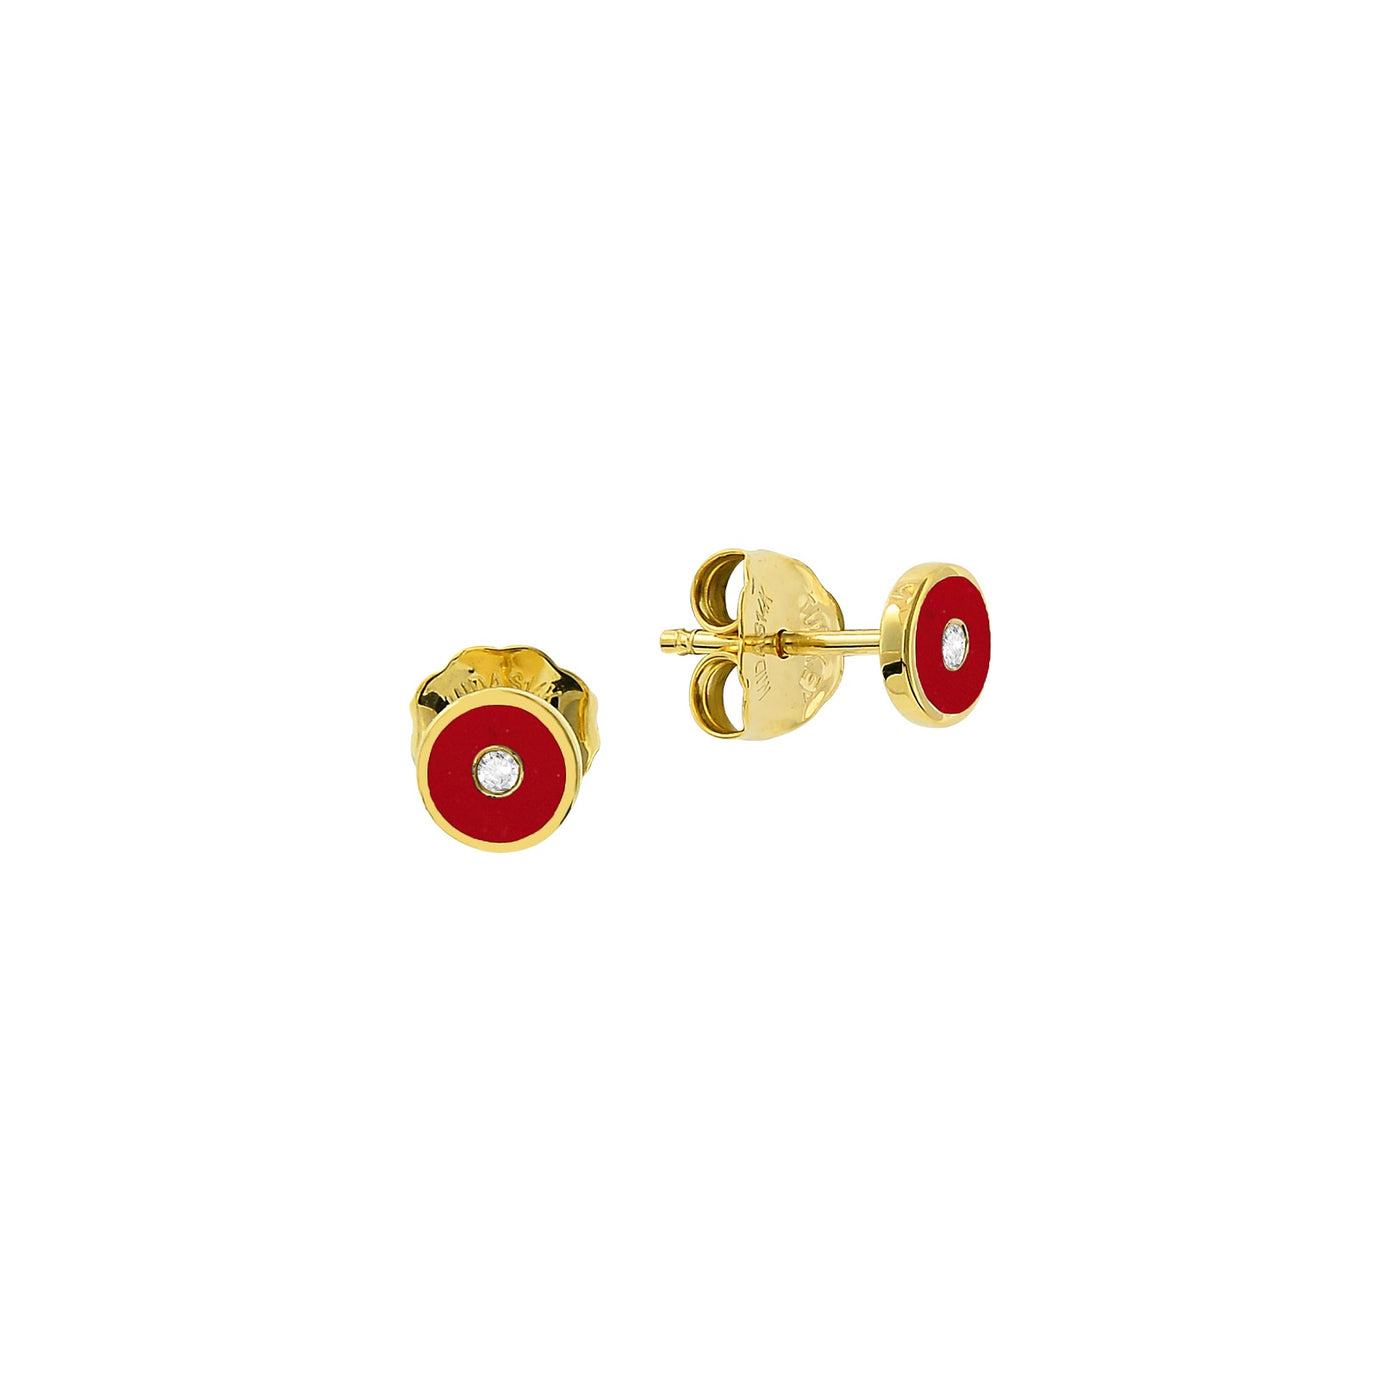 10ct Yellow Gold Diamond & Red Enamel Stud Earrings.